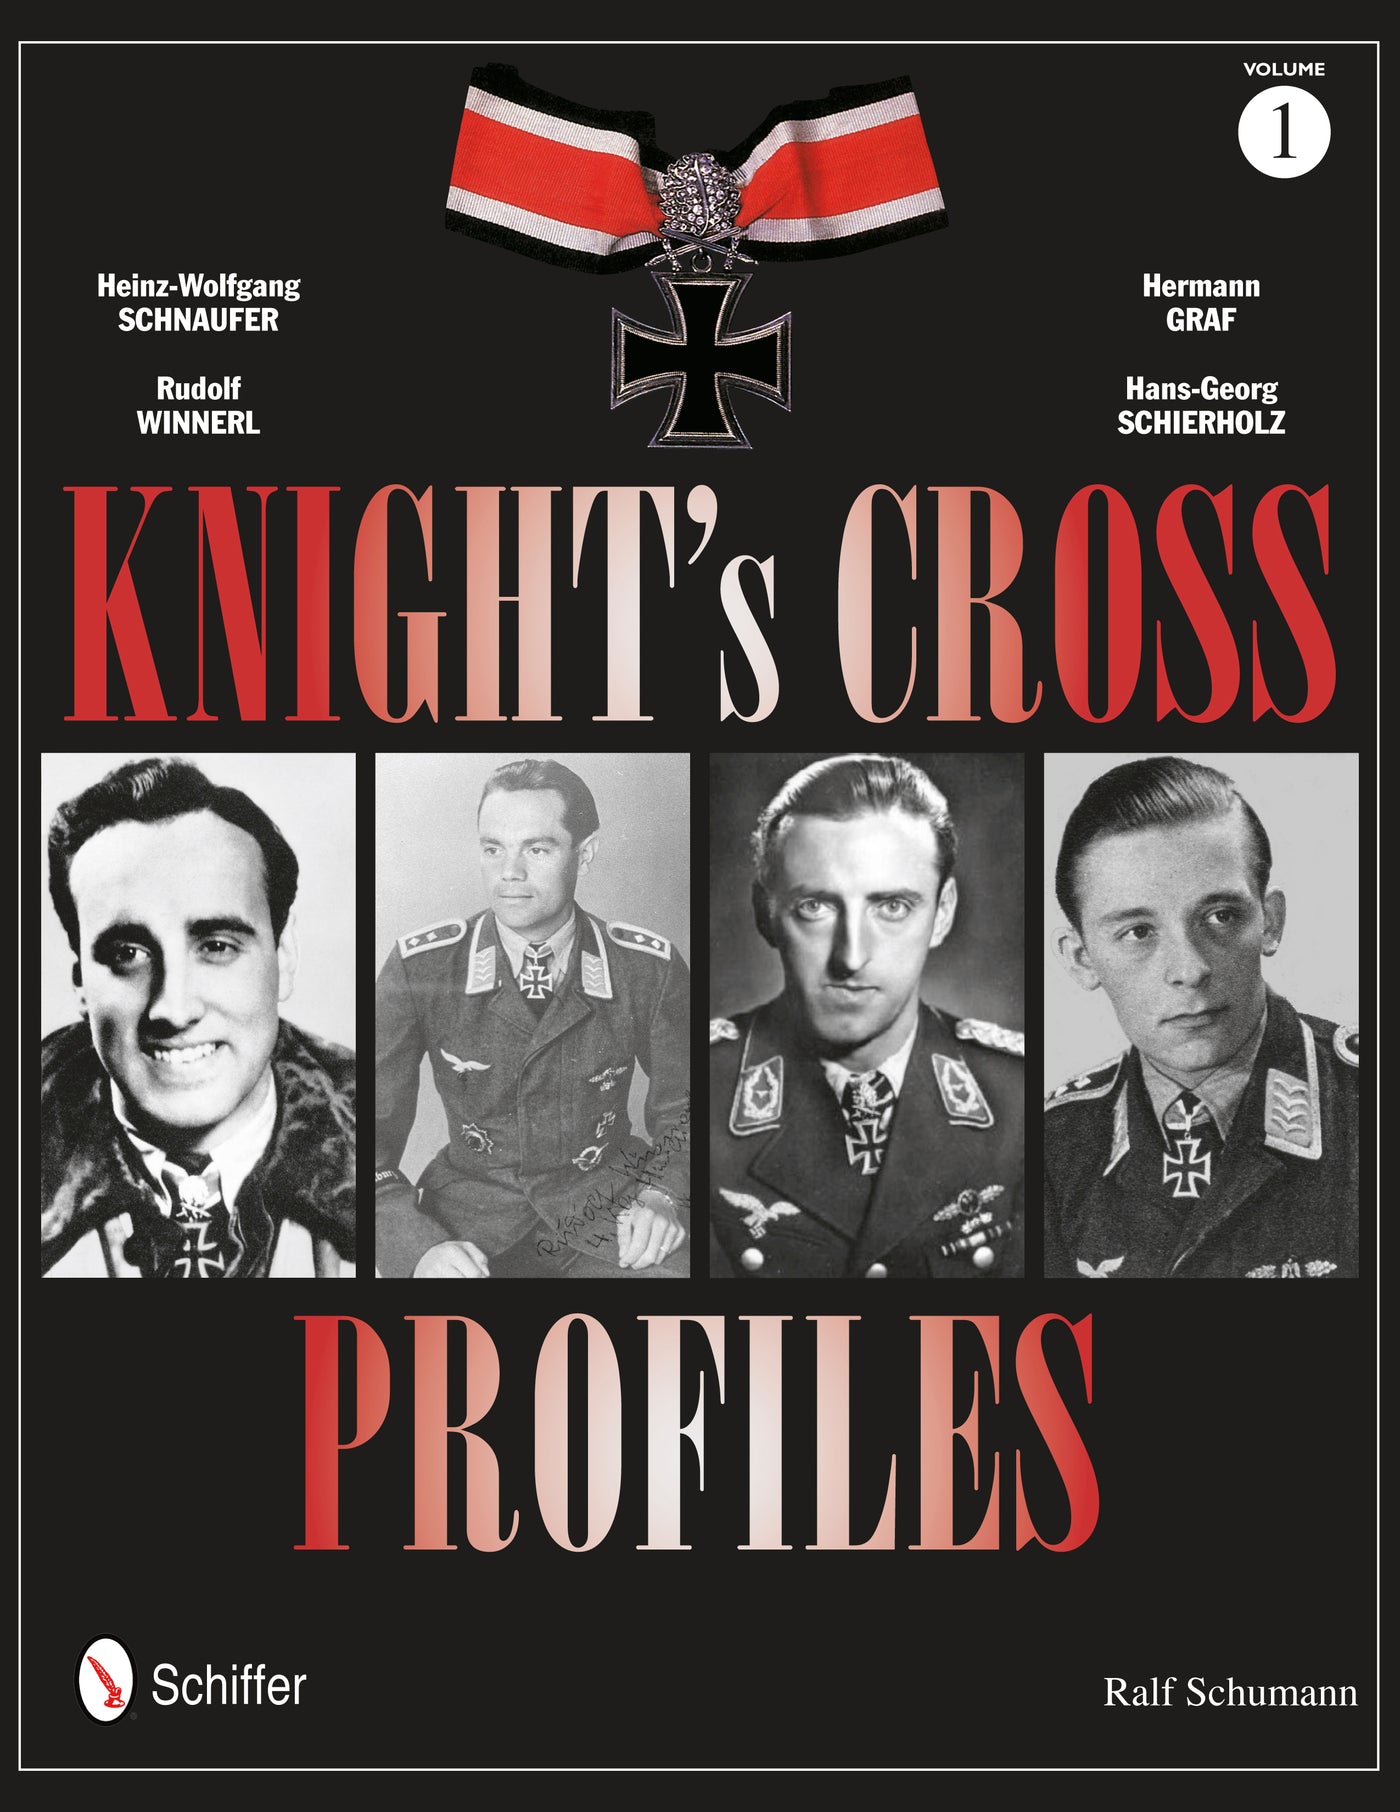 Knight's Cross Profiles Vol.1